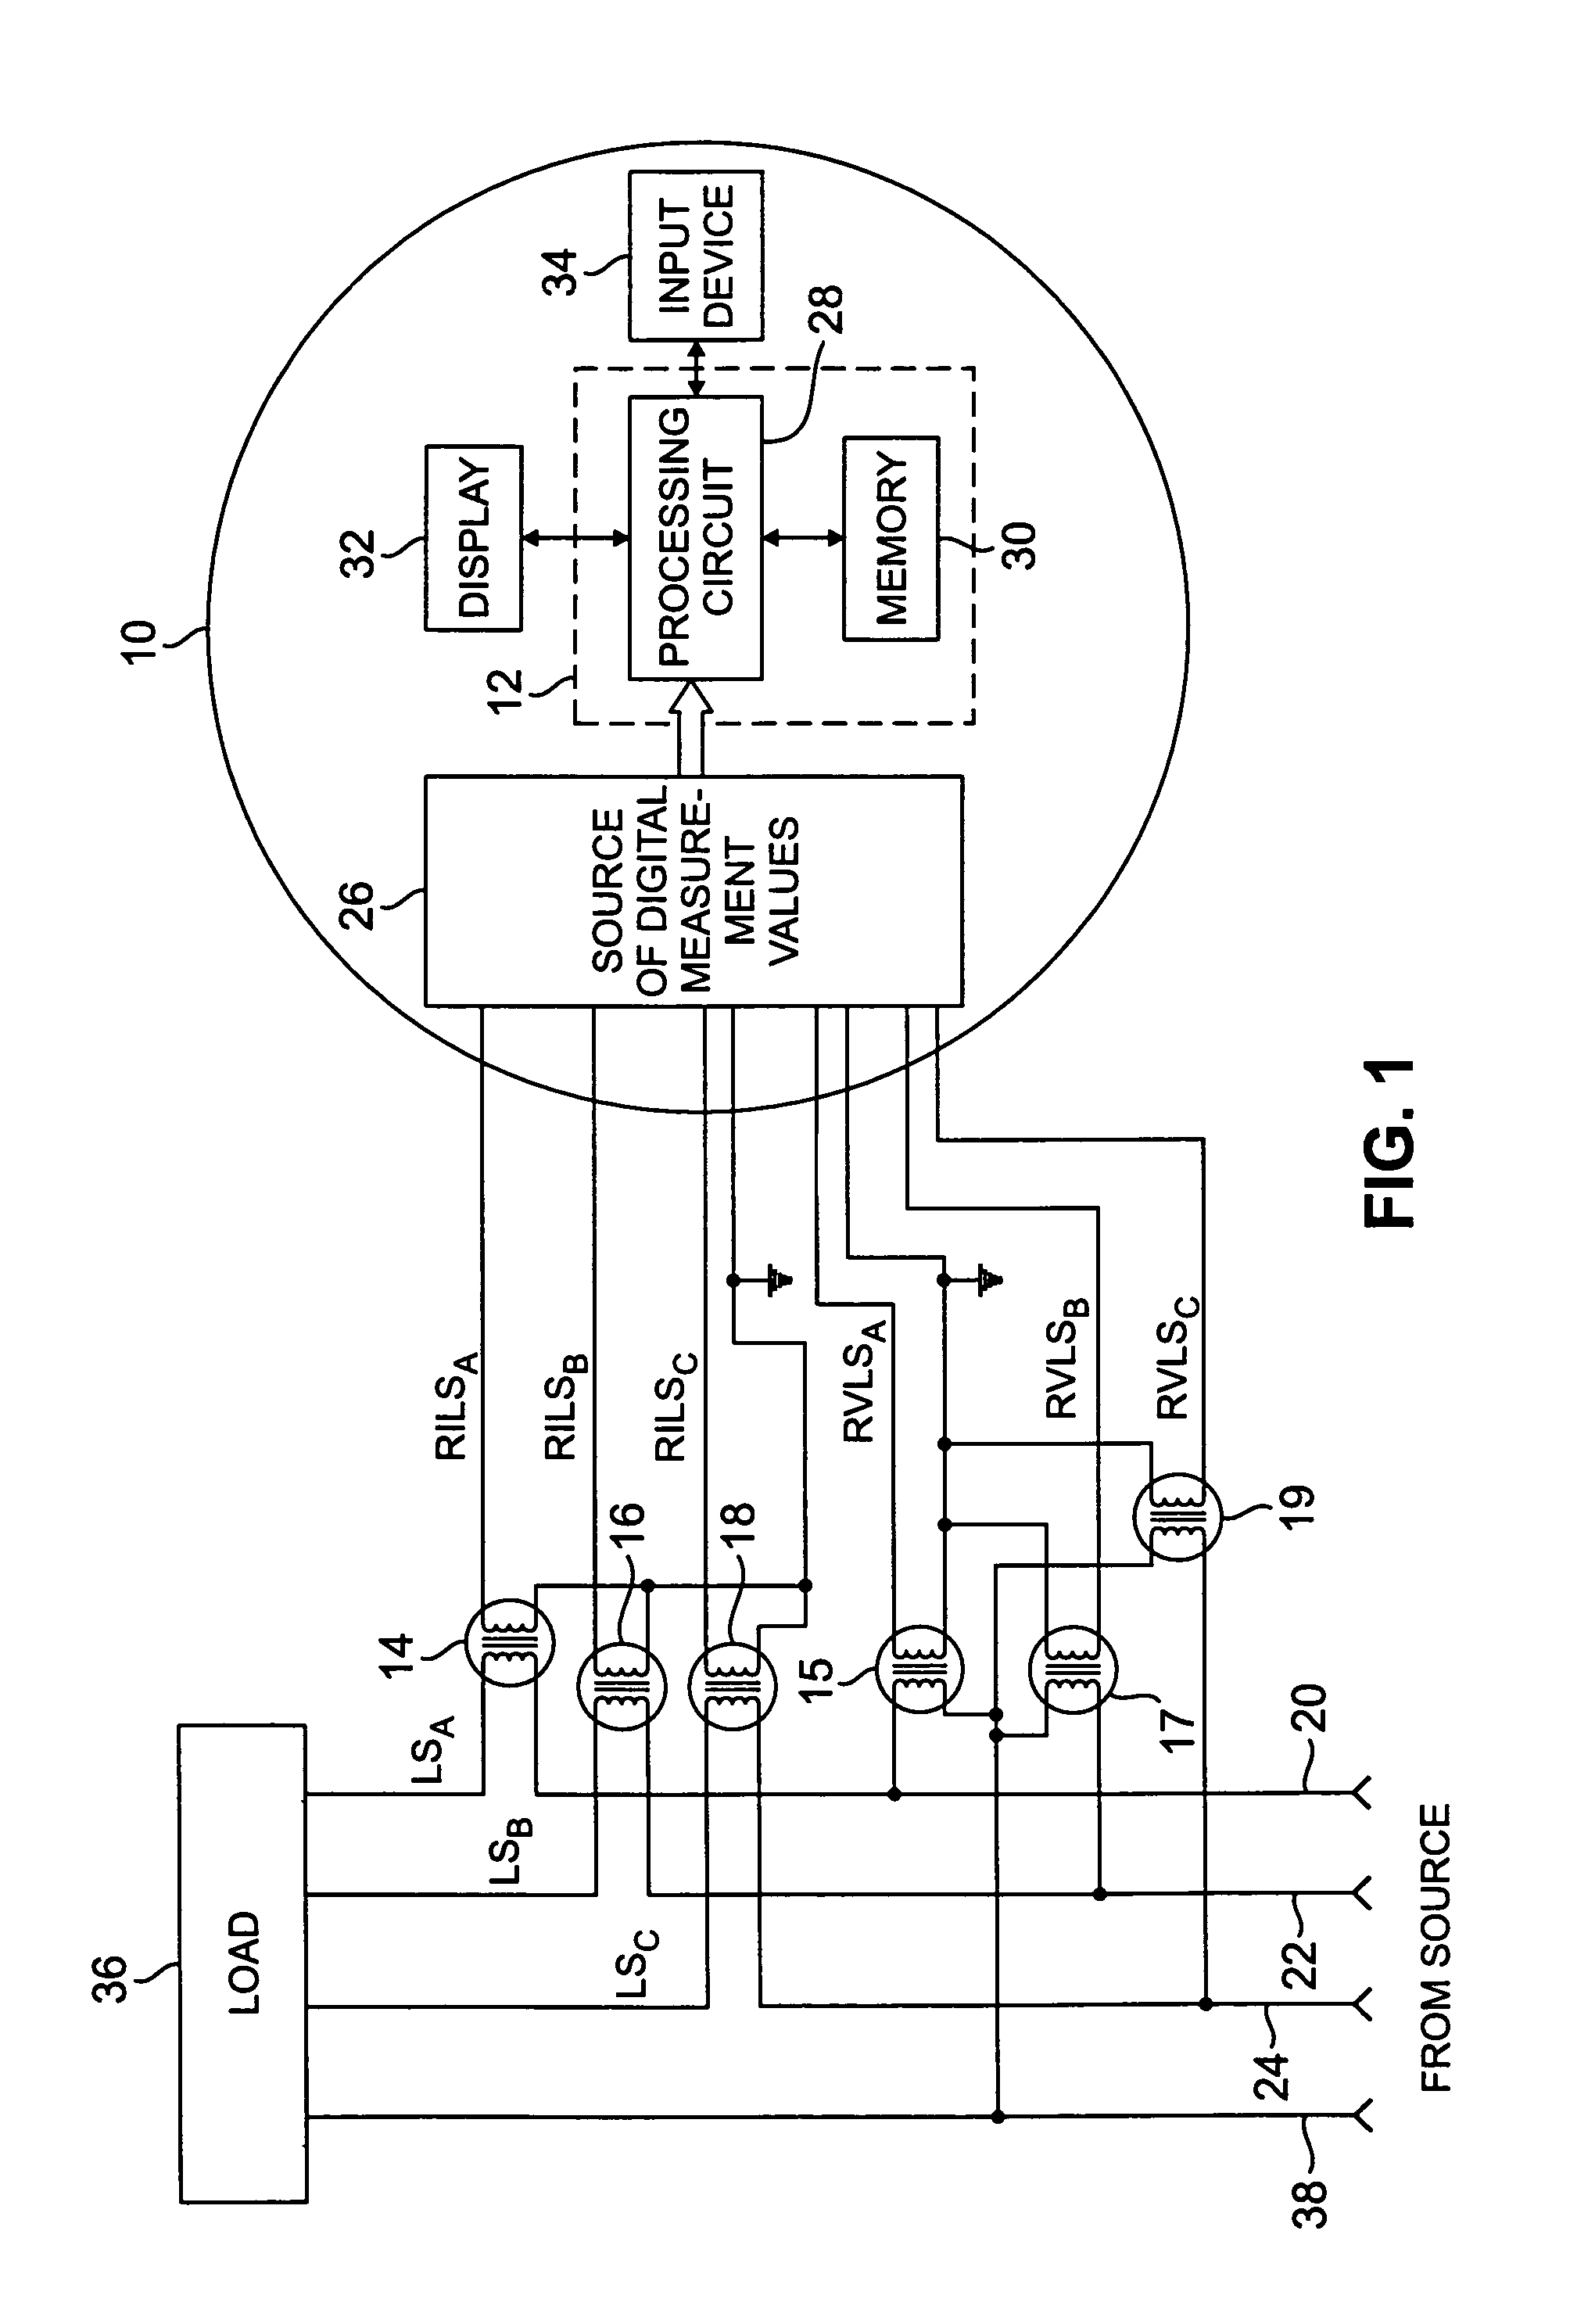 External transformer correction in an electricity meter